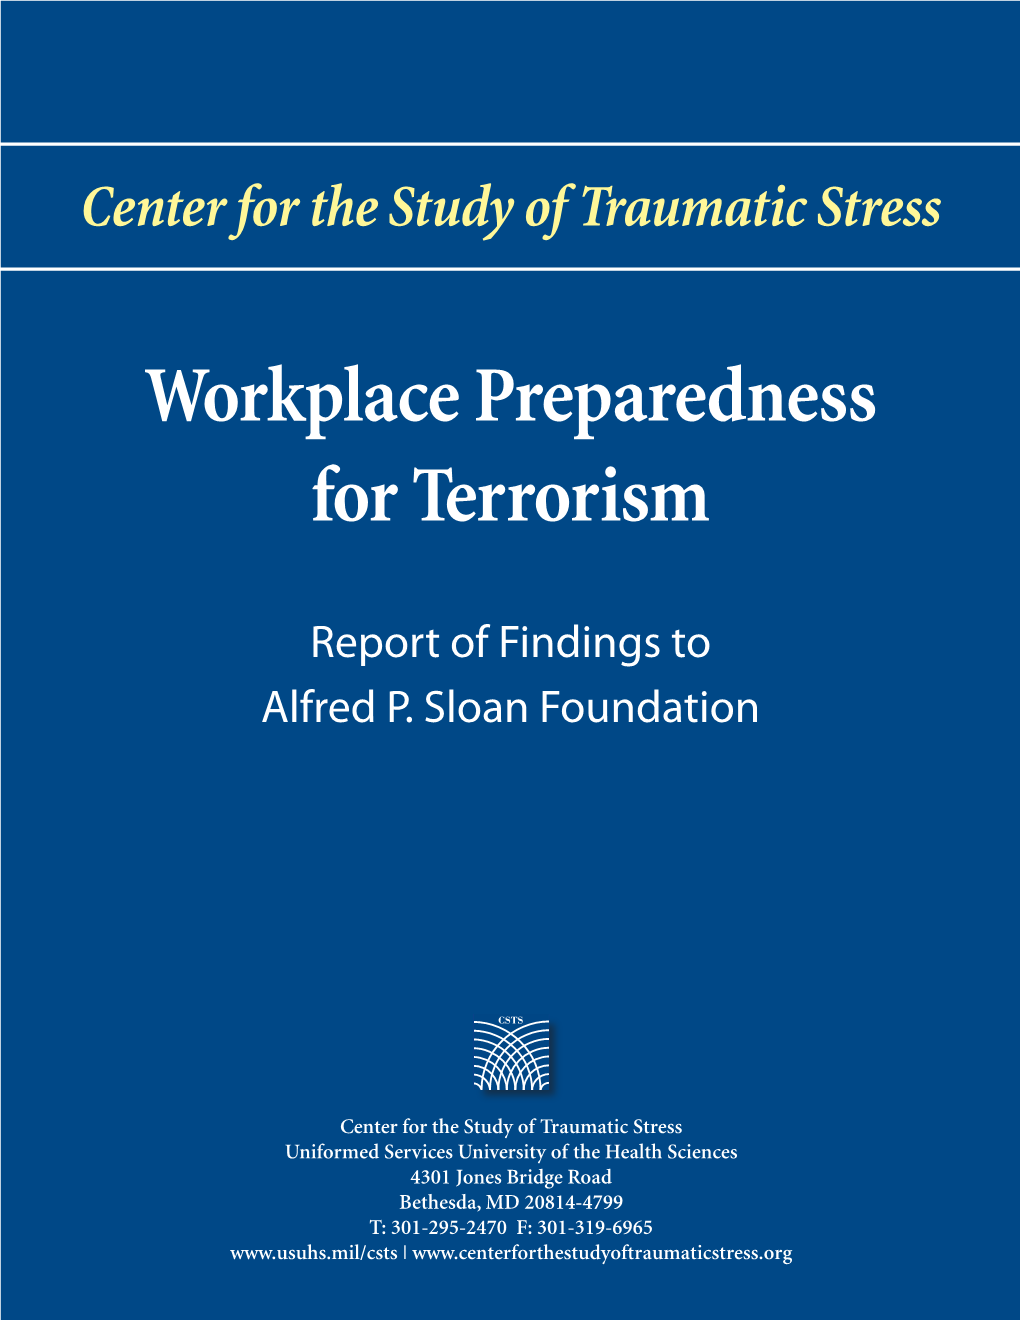 Workplace Preparedness for Terrorism